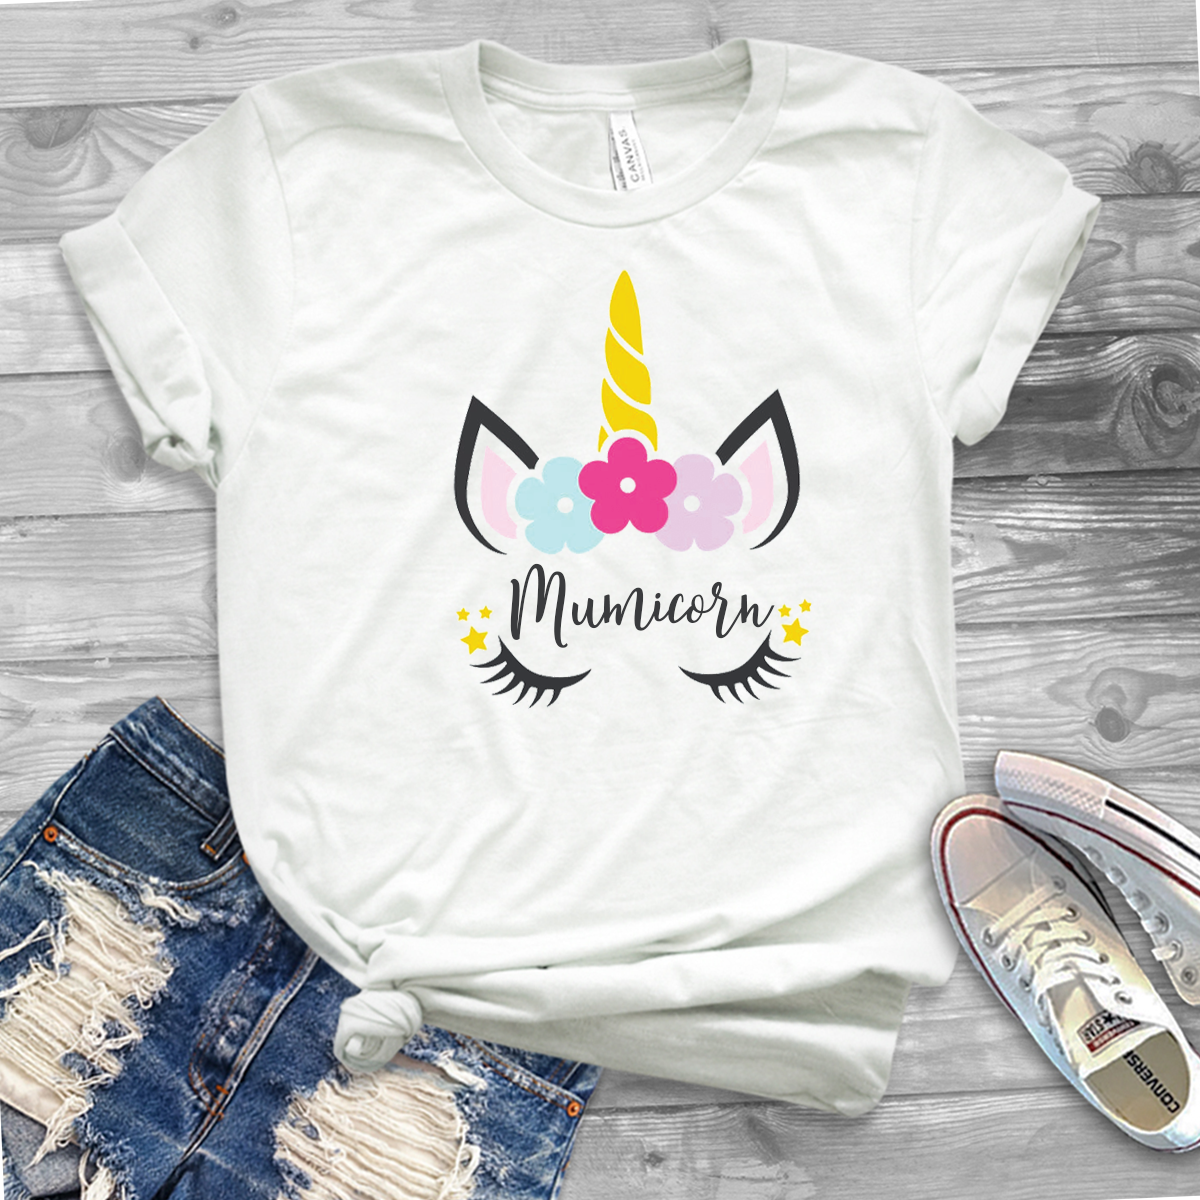 Mumicorn Unicorn white t-shirt - Personalised options!